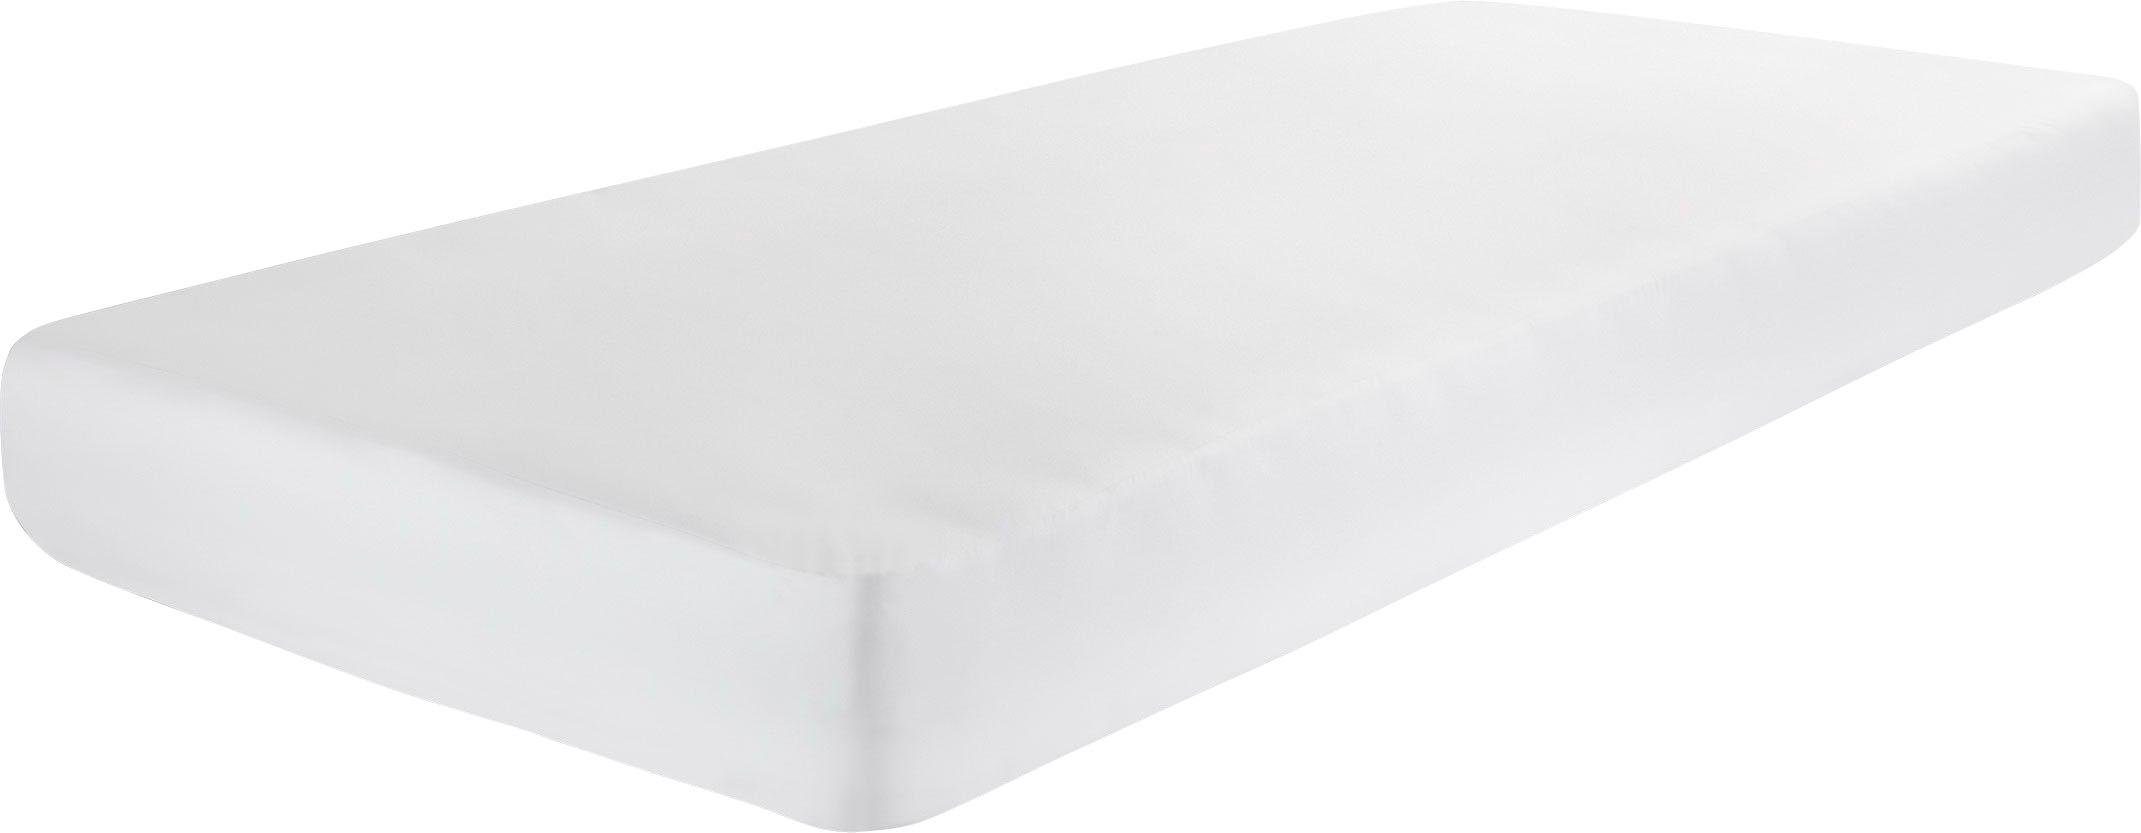 Matratzenschutzbezug Protect & wasserdichtes Dormisette Spannbettlaken Care, geeignet Hausstauballergiker